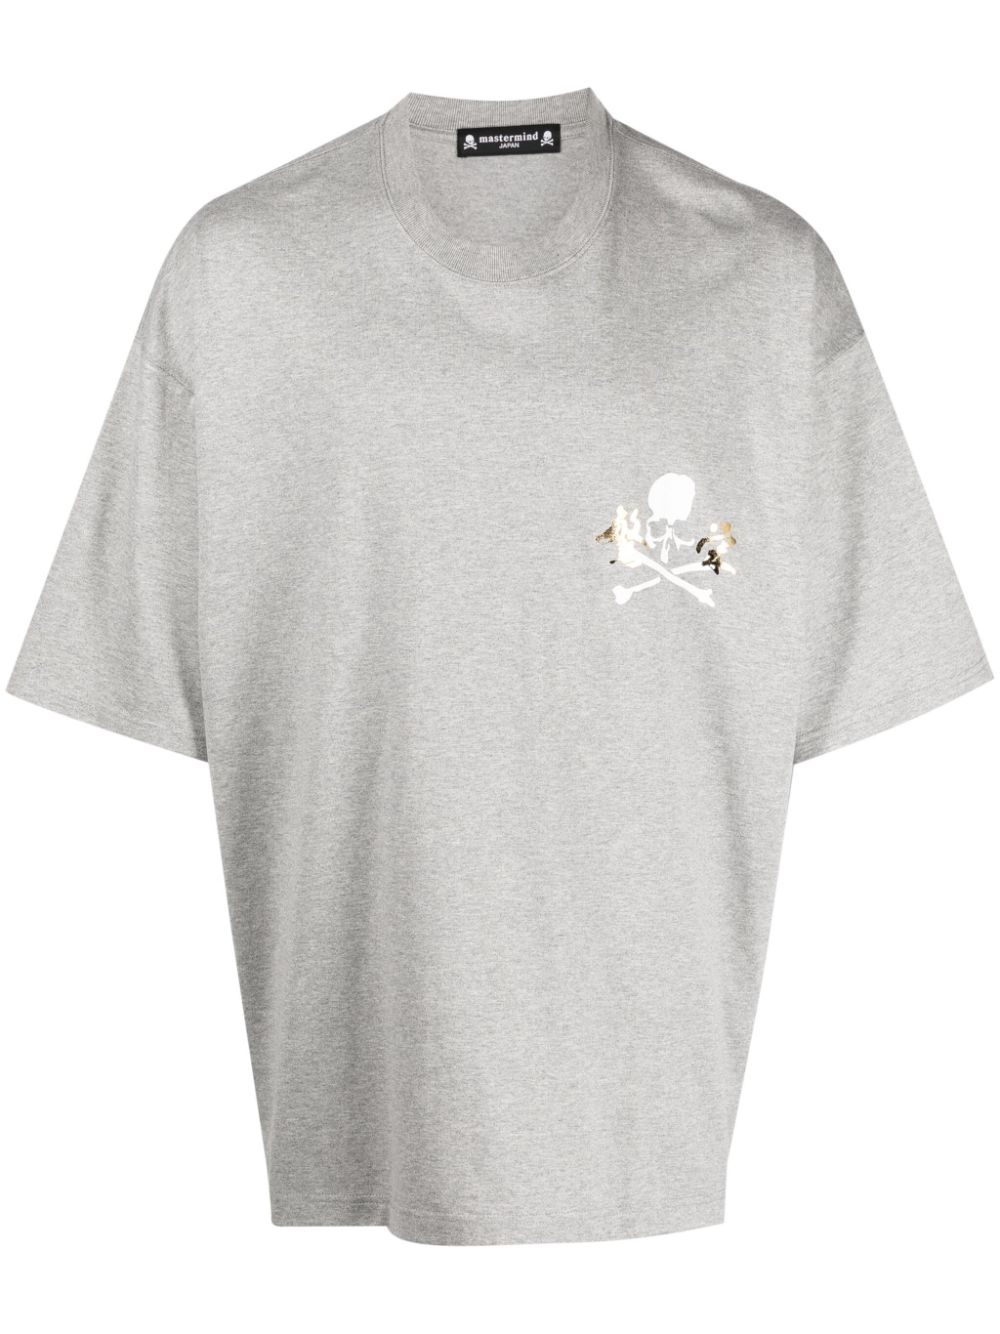 metallic-effect skull-print T-shirt - 1